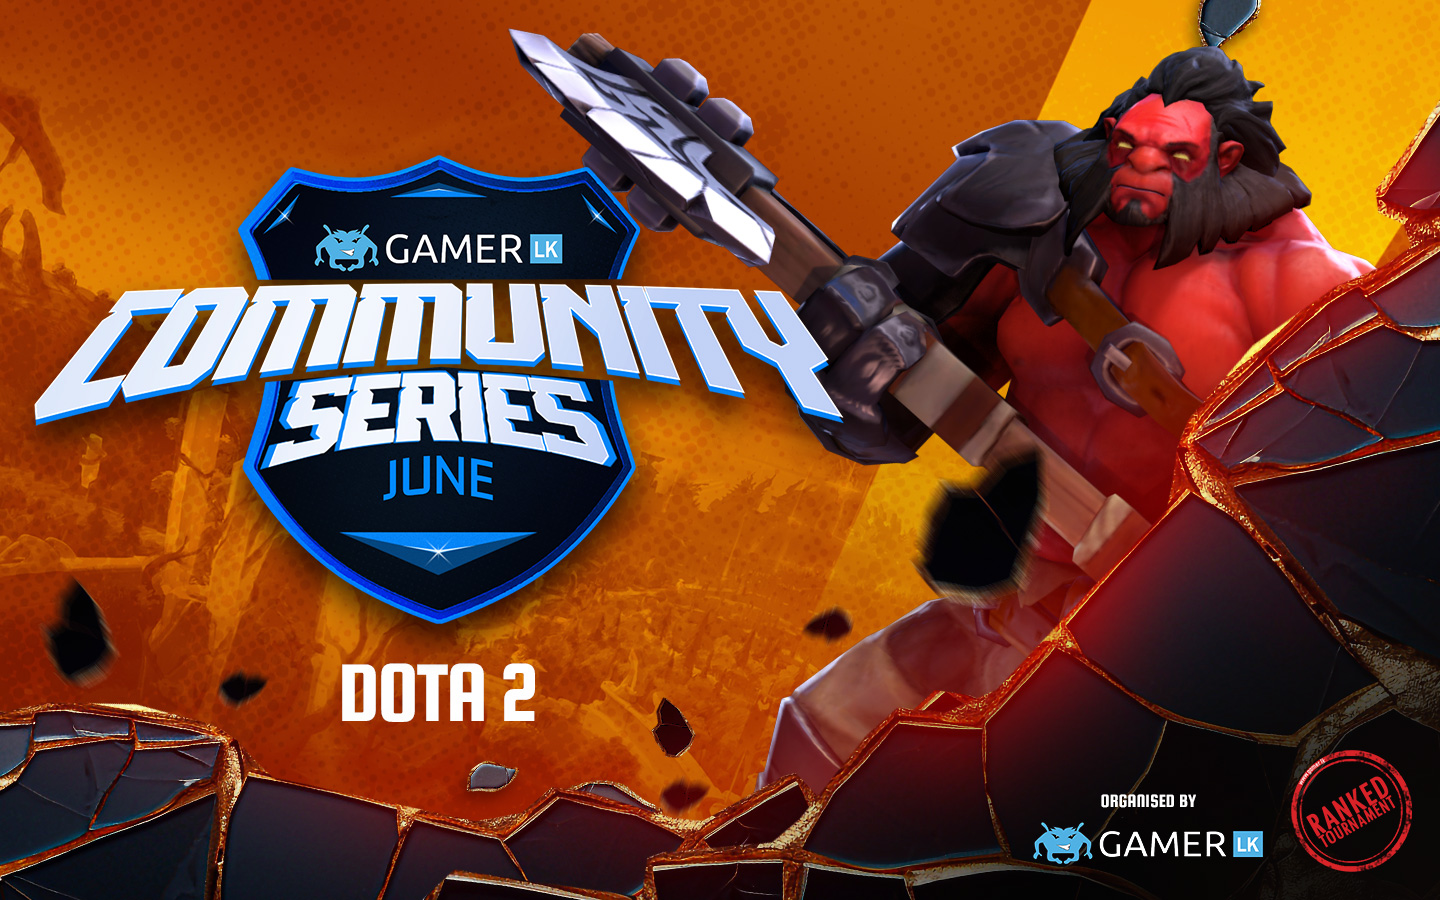 Gamer.LK Community Series - DOTA 2